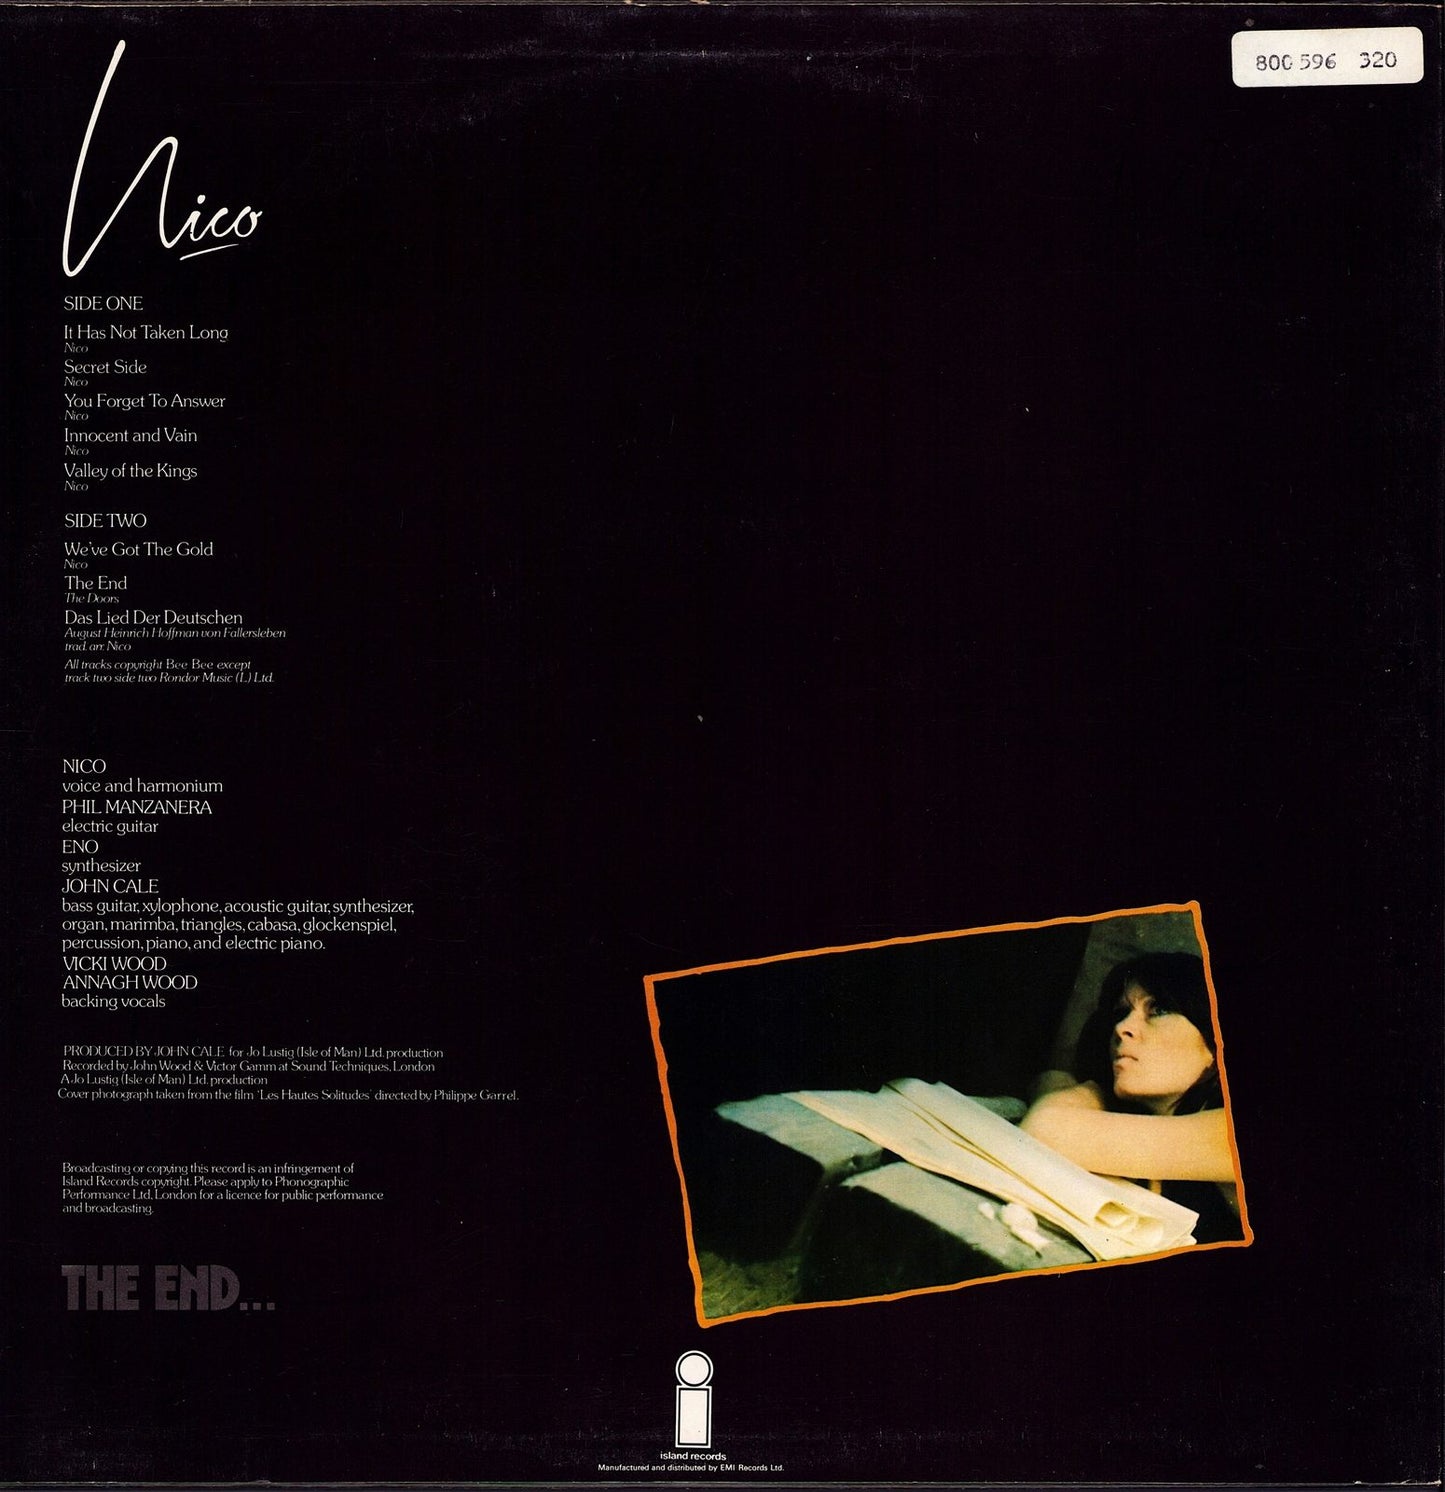 Nico - The End... Vinyl LP